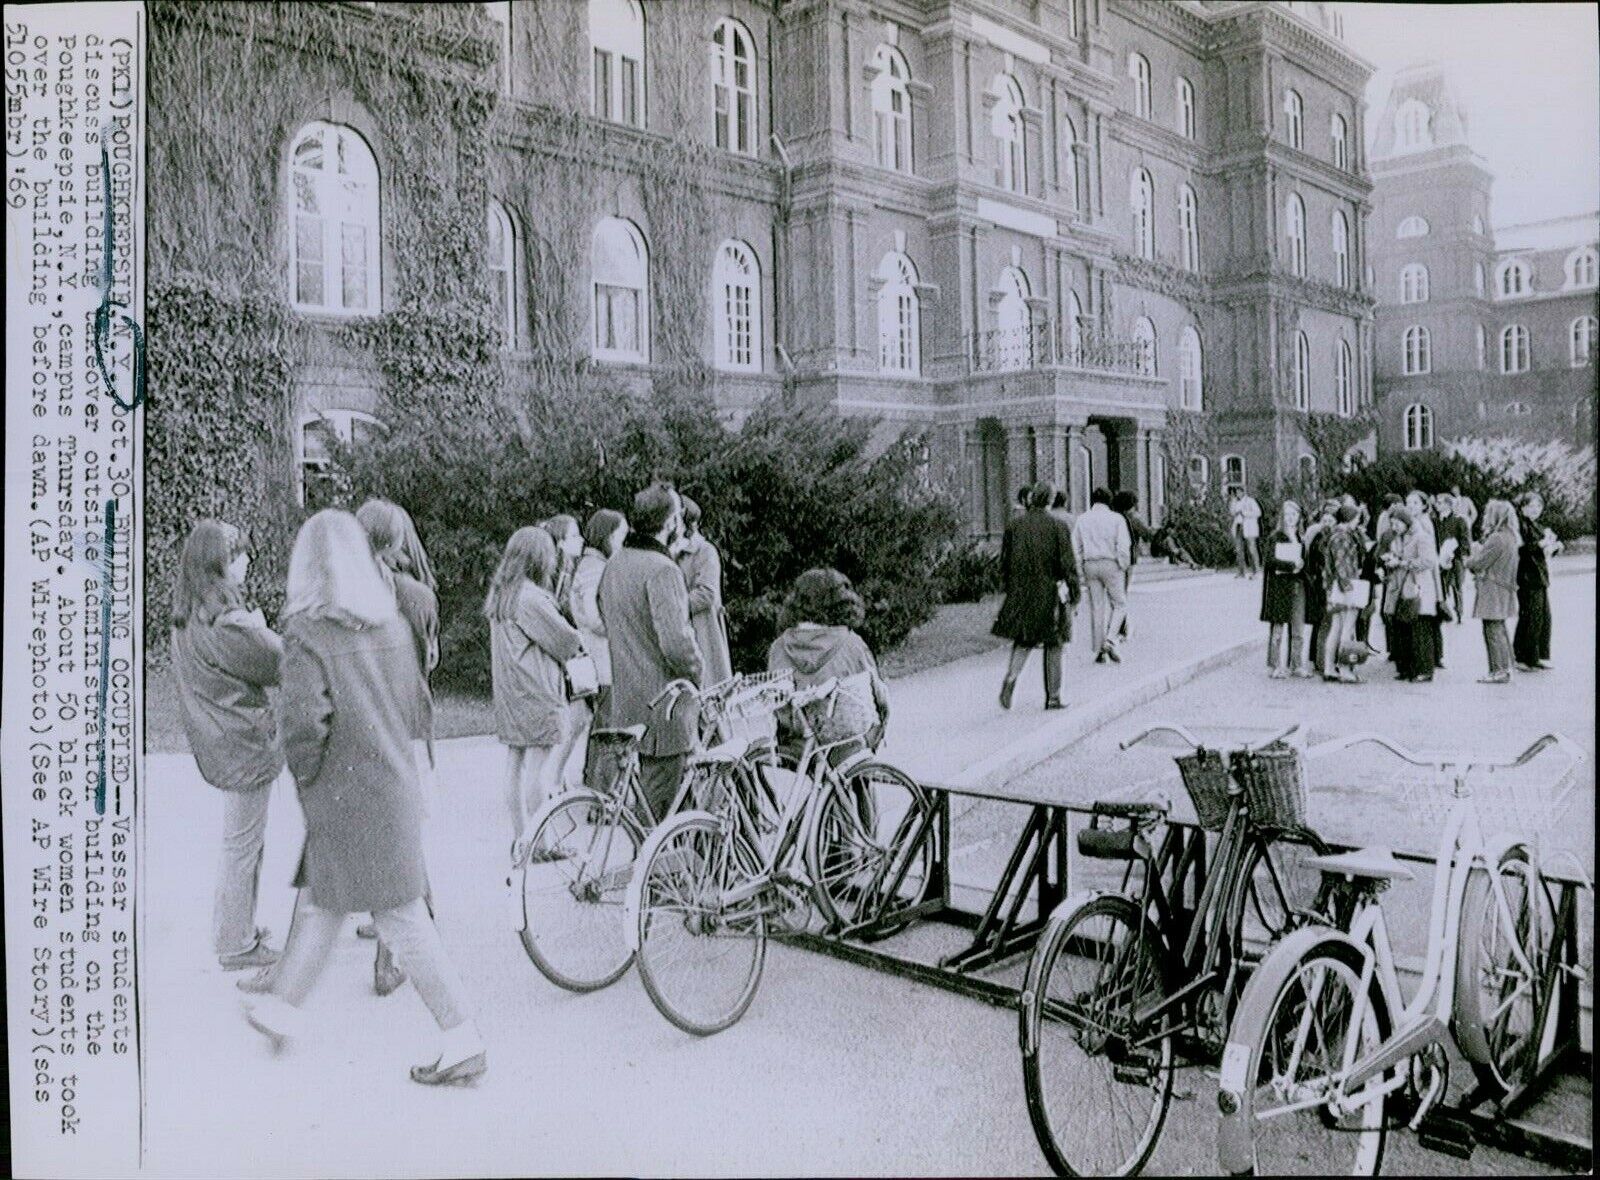 LG814 1969 Wire Photo BUILDING OCCUPIED Vassar College Black Students Protest